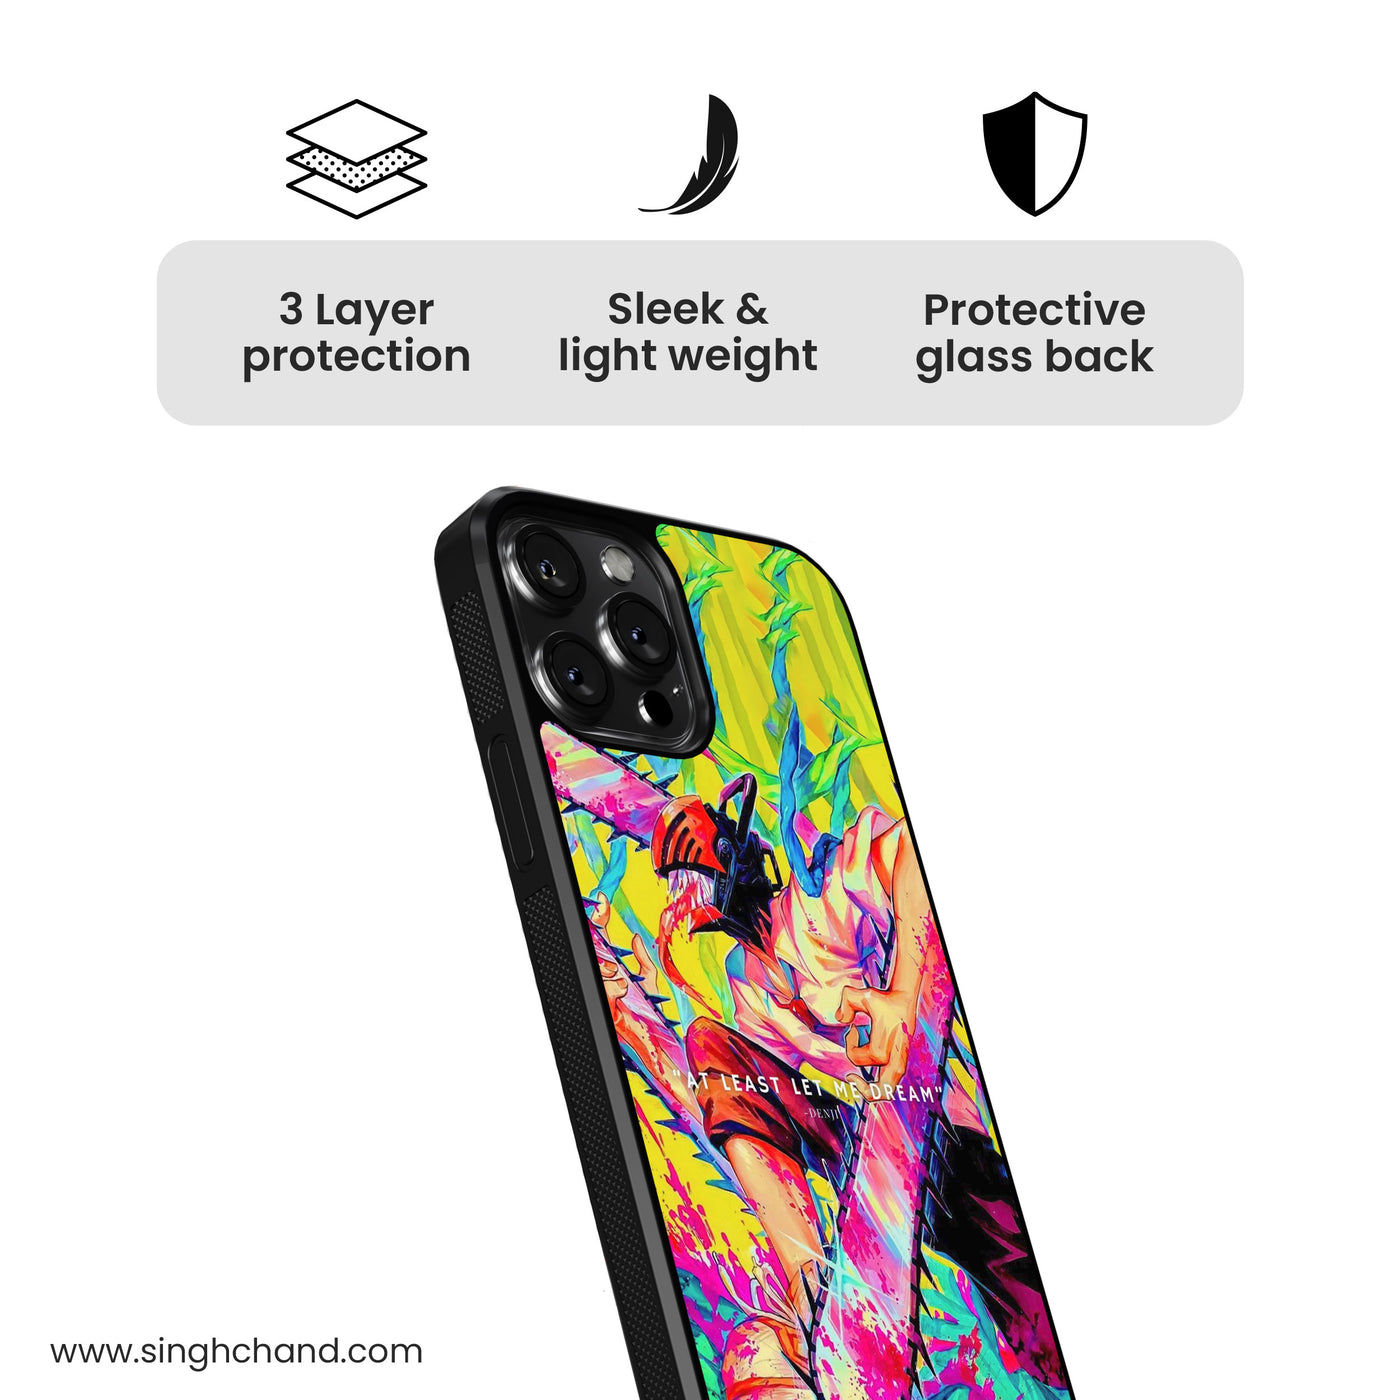 Chainsaw Man 4.0 Anime Glass Phone Case